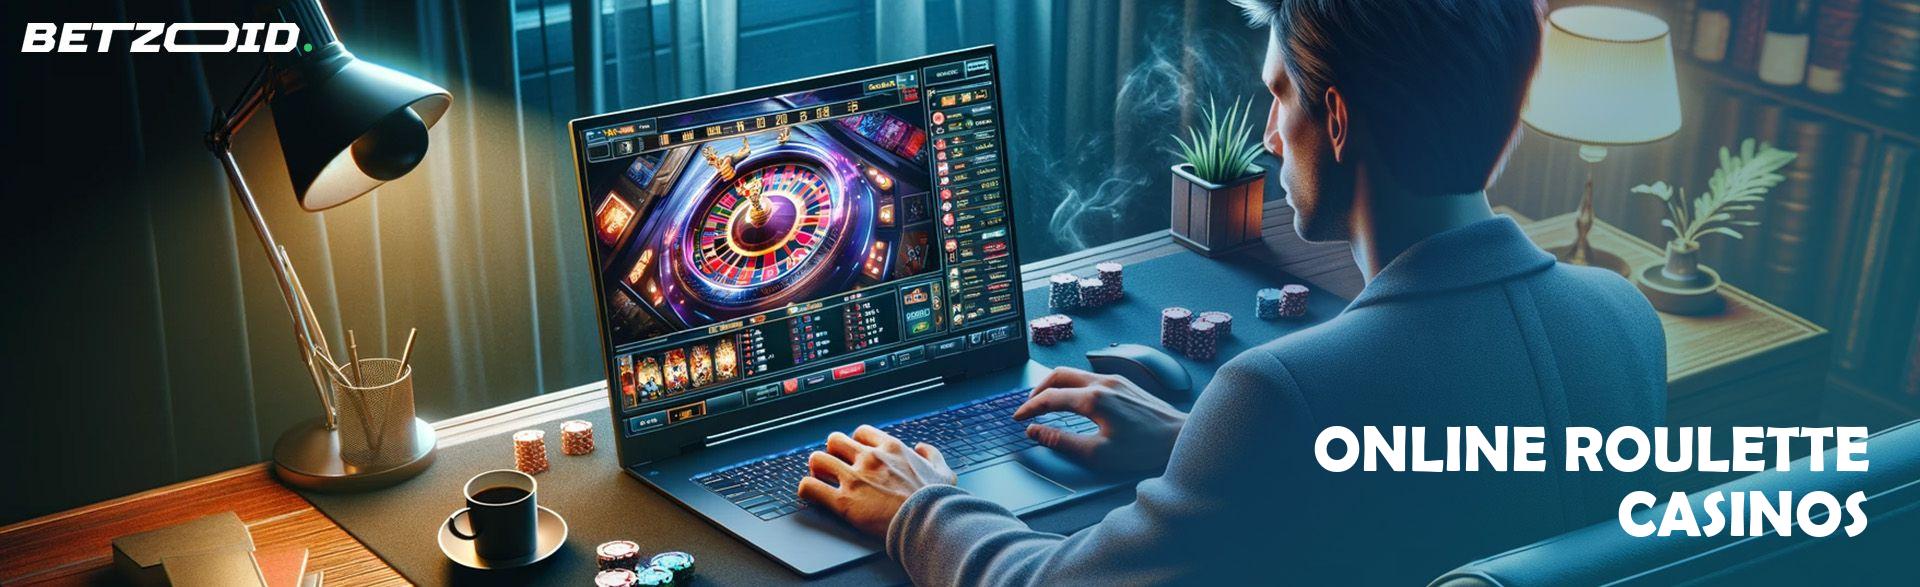 Online Roulette Casinos.